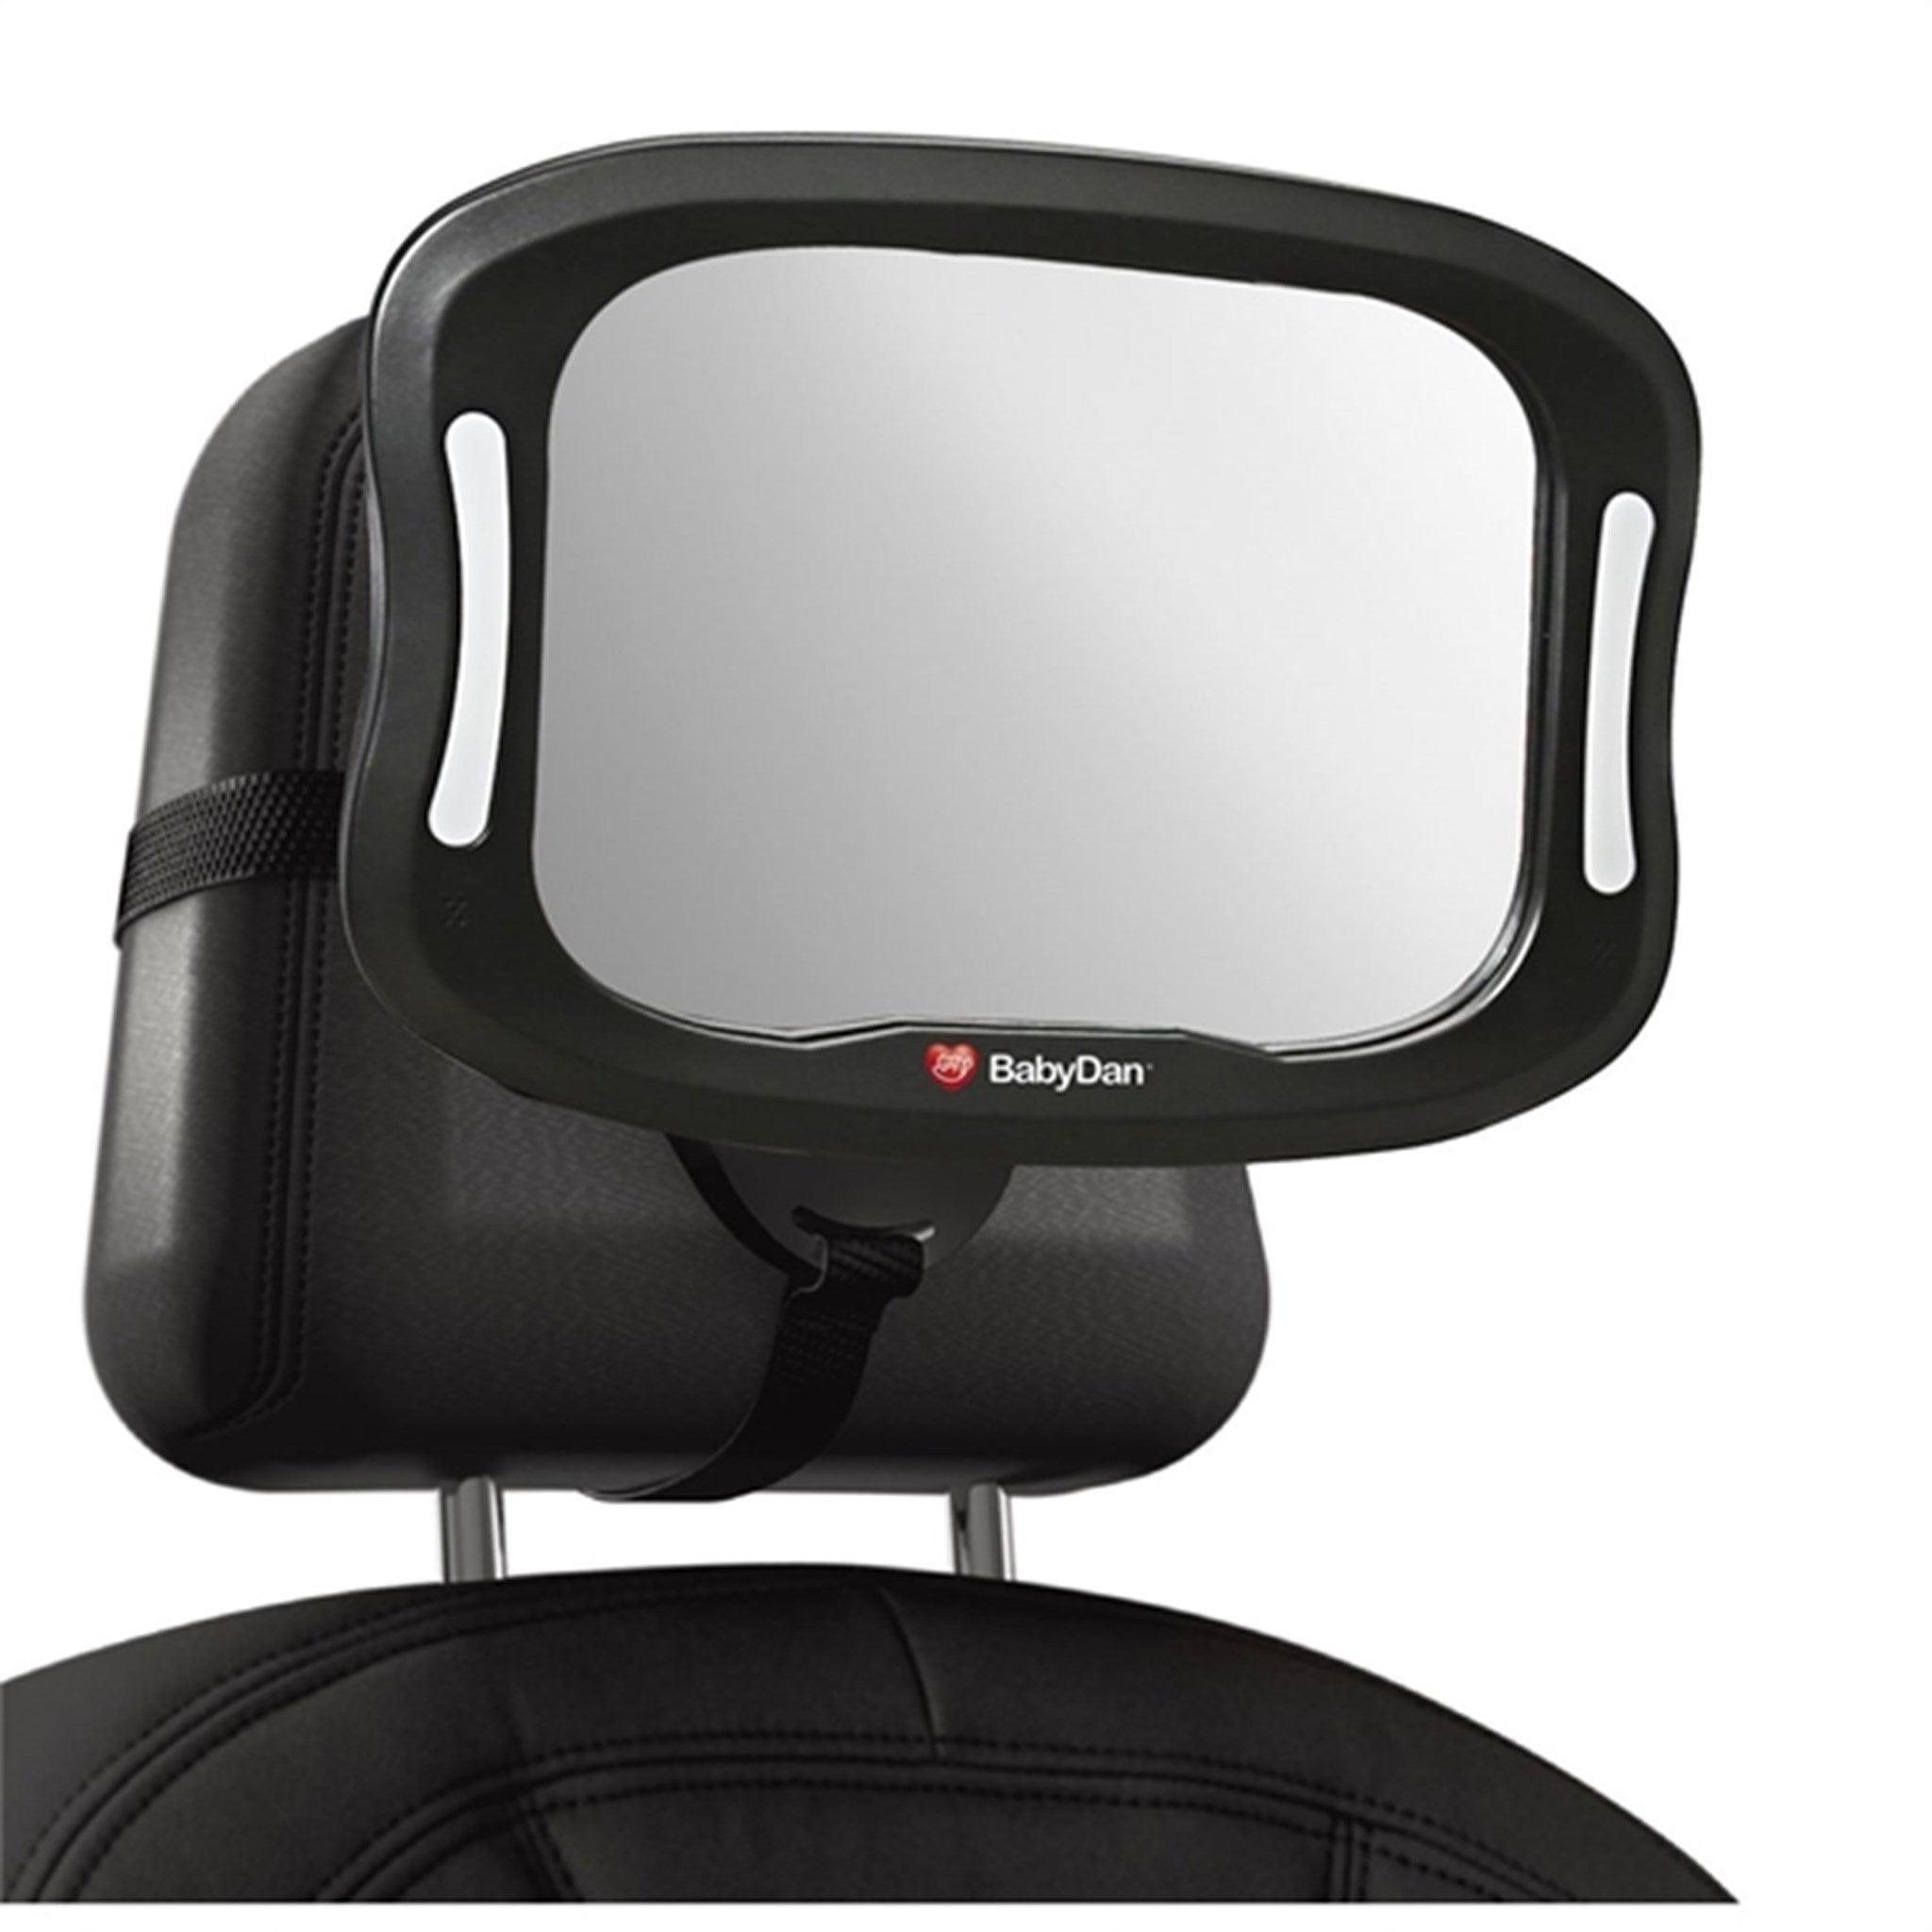 BabyDan Car Seat Mirror with LED light 28,5x19,5cm